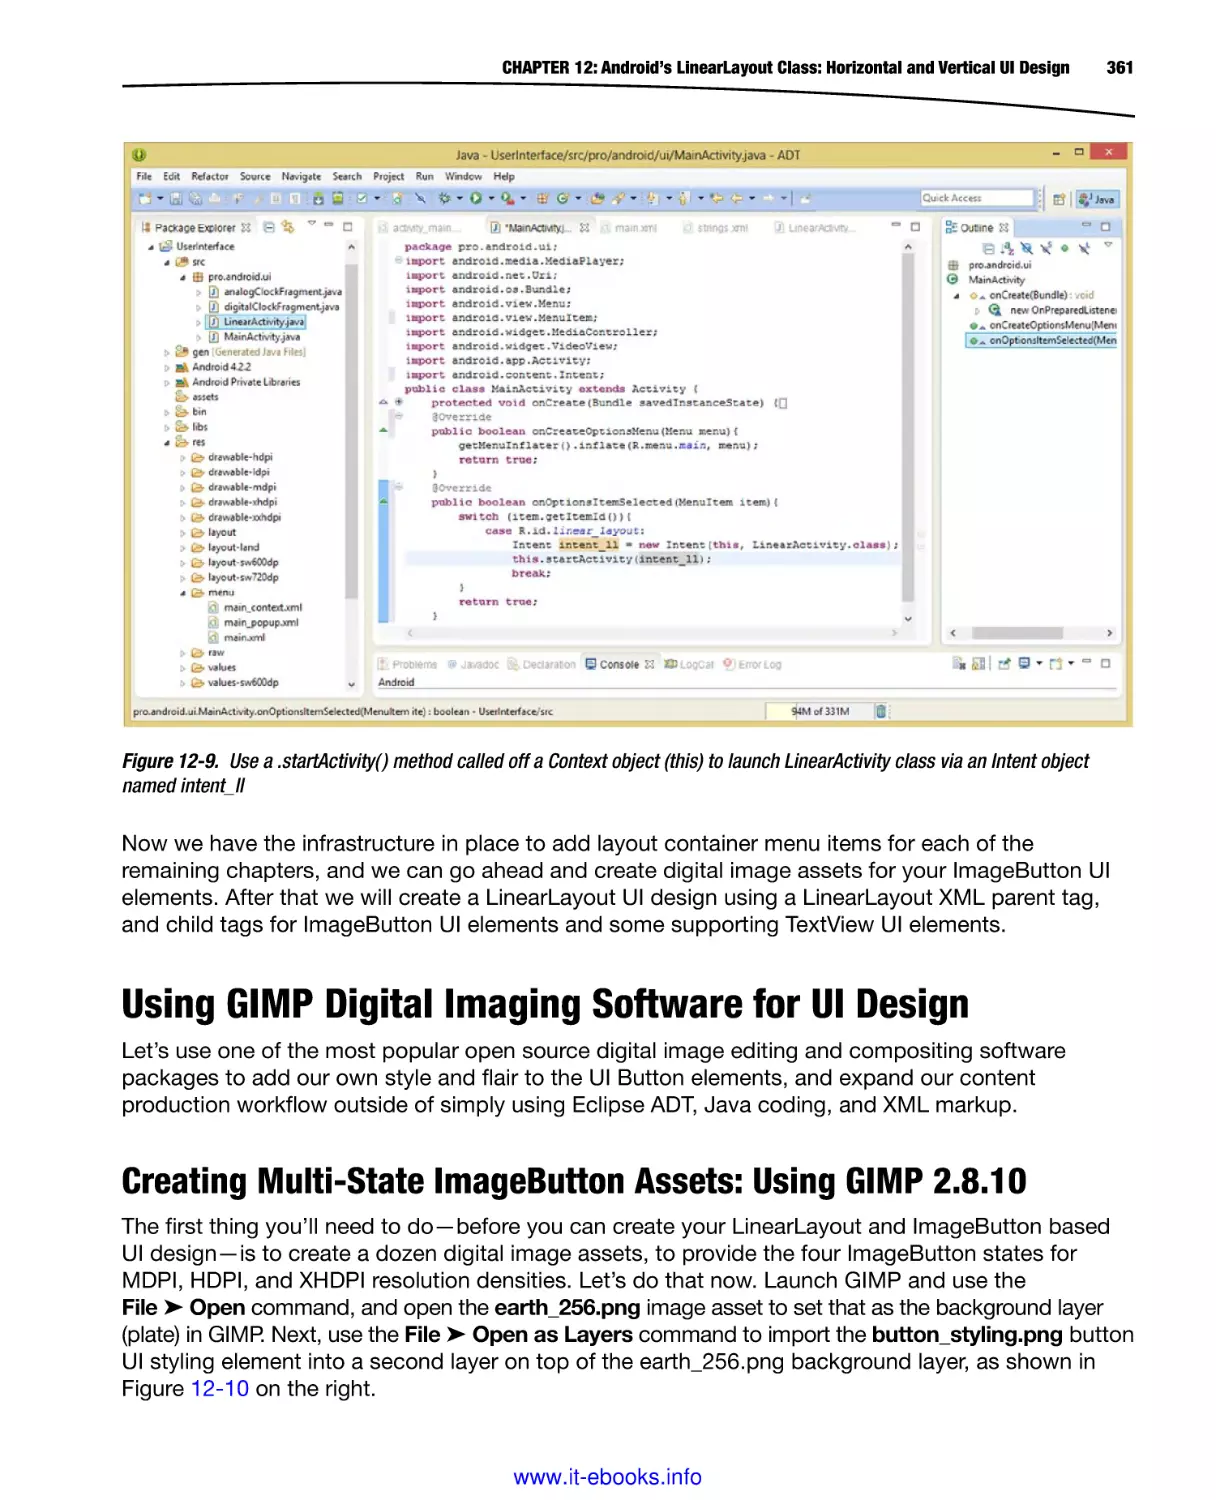 Using GIMP Digital Imaging Software for UI Design
Creating Multi-State ImageButton Assets